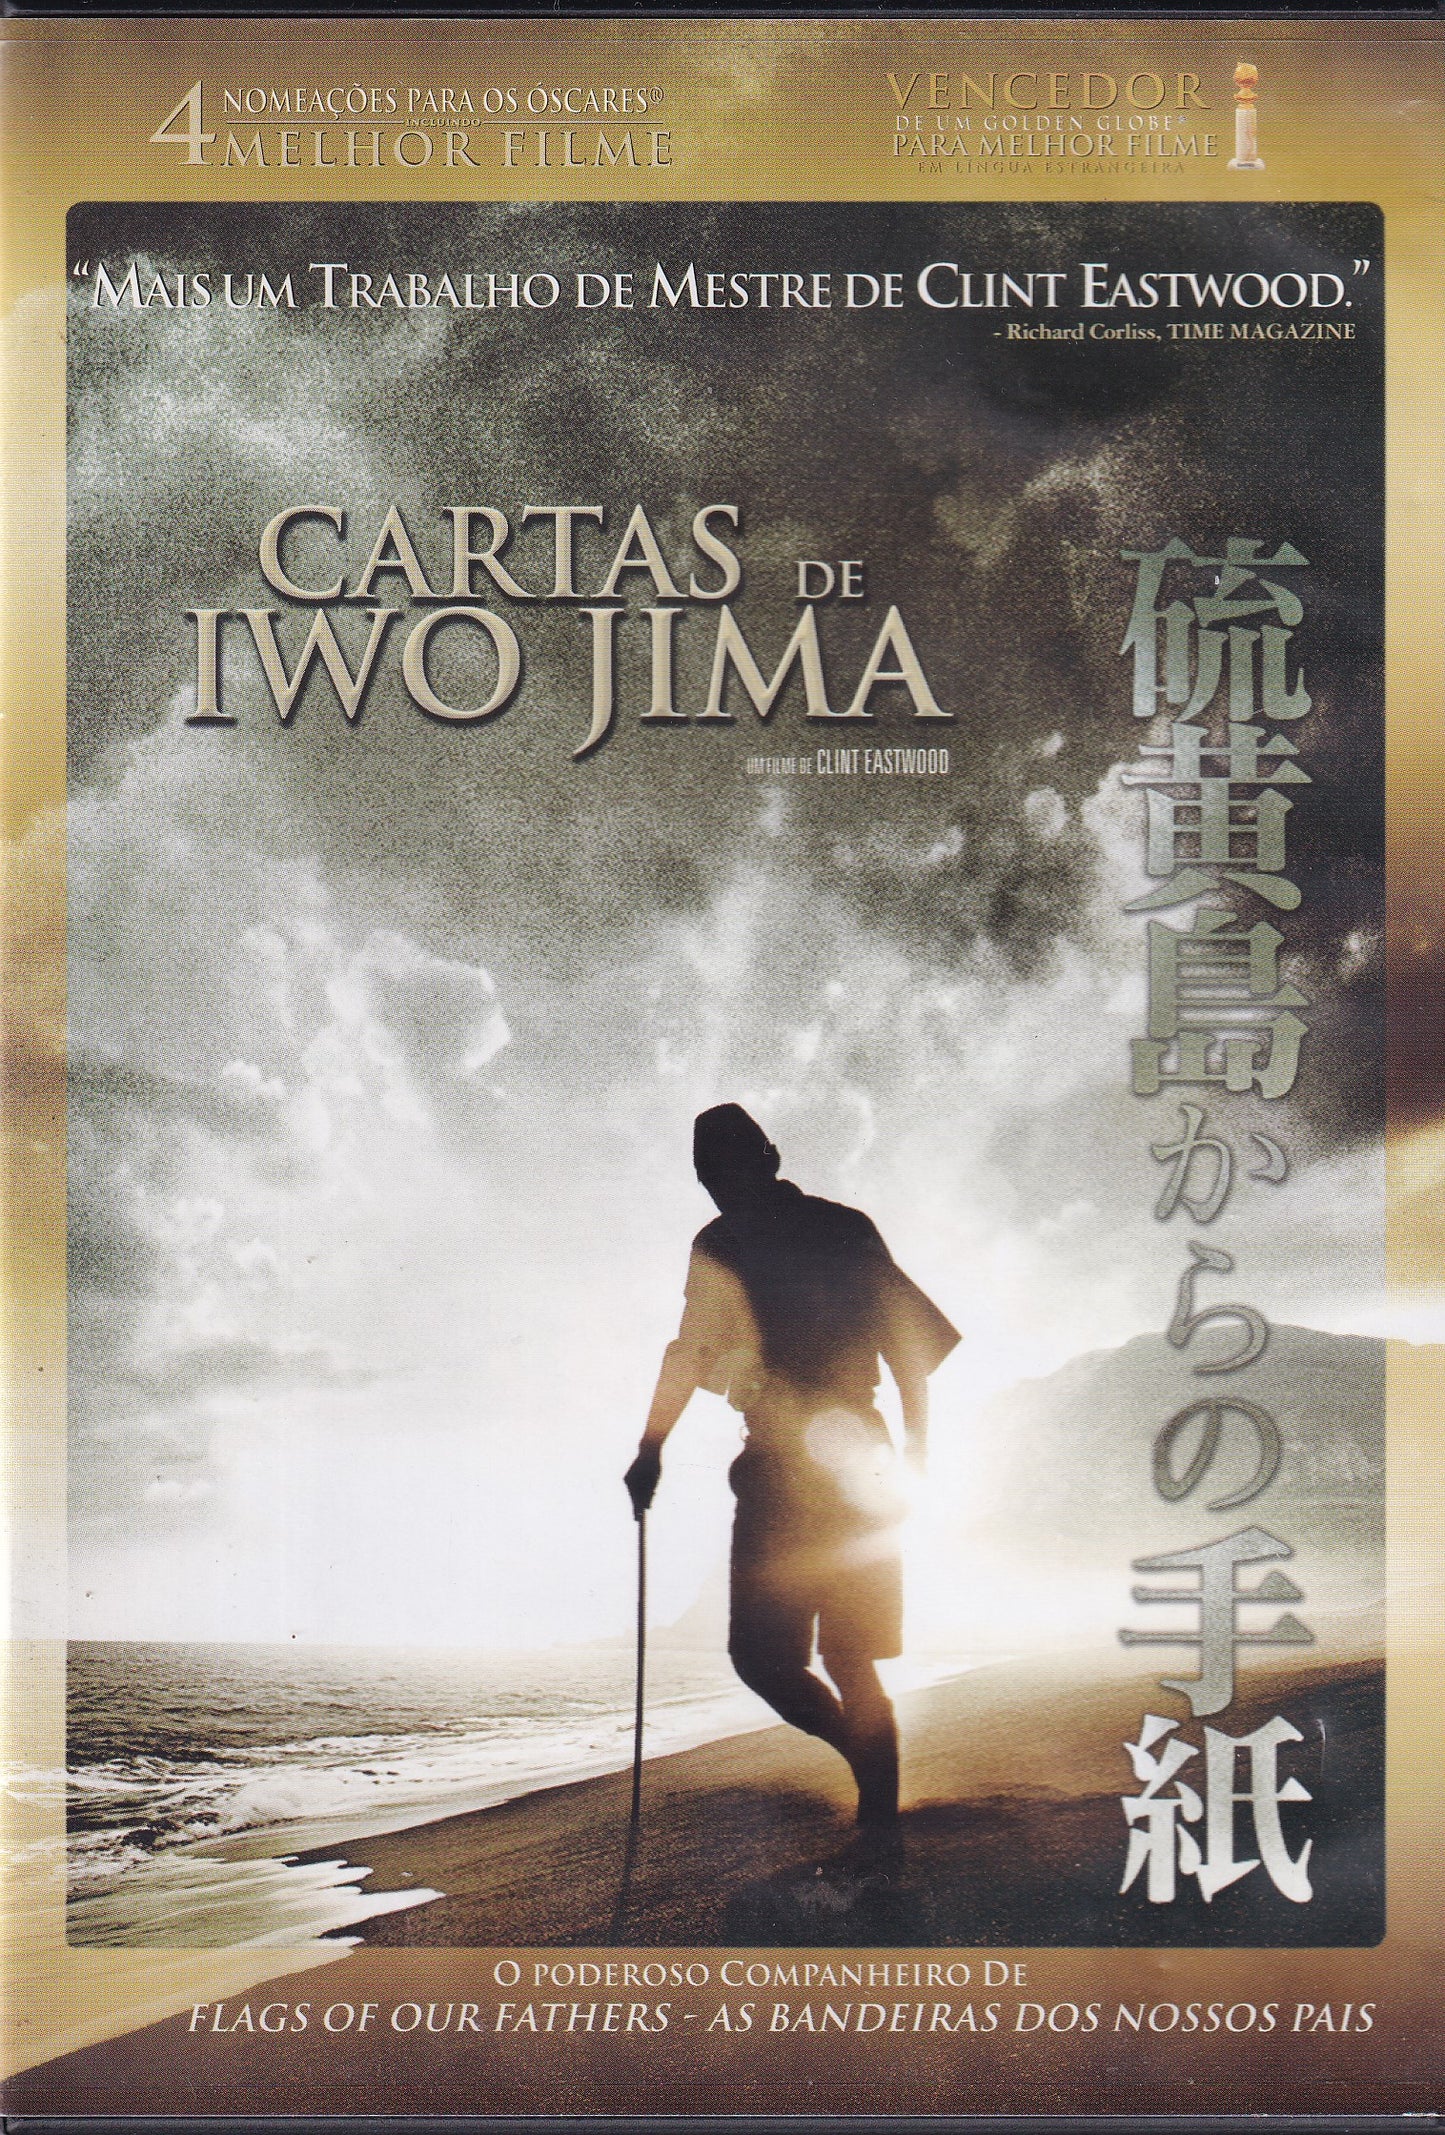 DVD CARTAS DE IWO JIMA - USADO